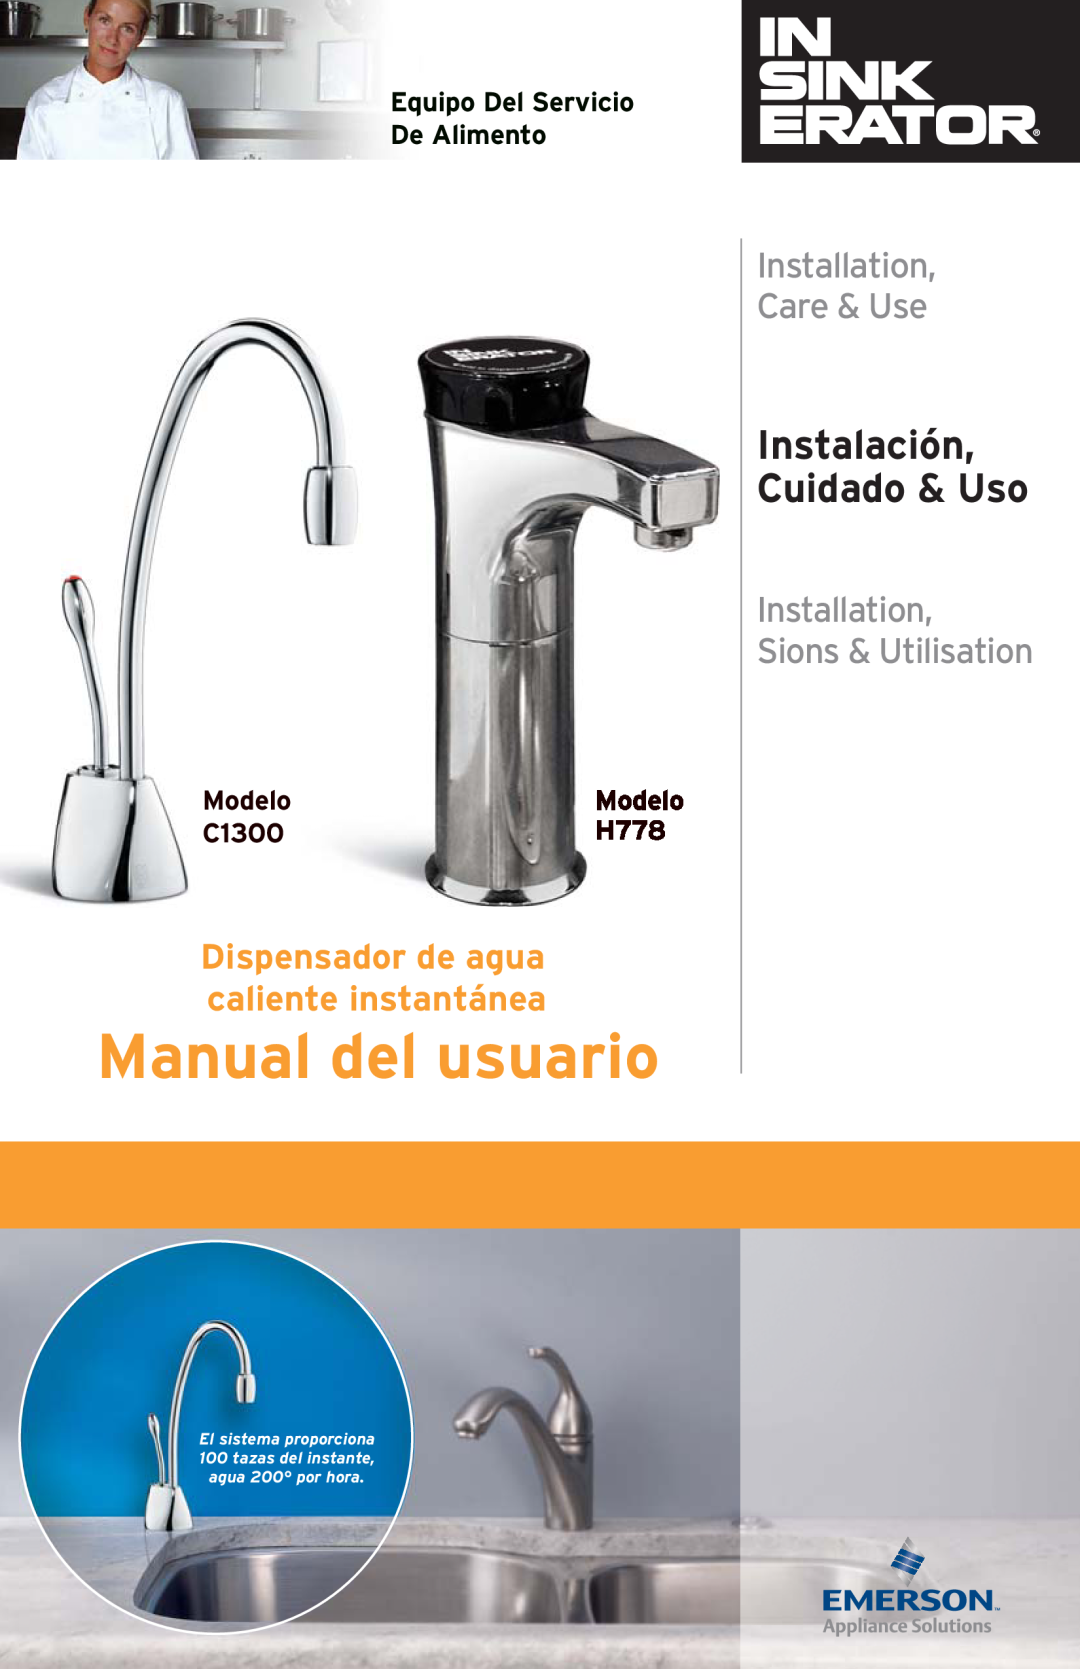 InSinkErator C1300 Dispensador de agua caliente instantánea, Installation Care & Use, Equipo Del Servicio De Alimento 